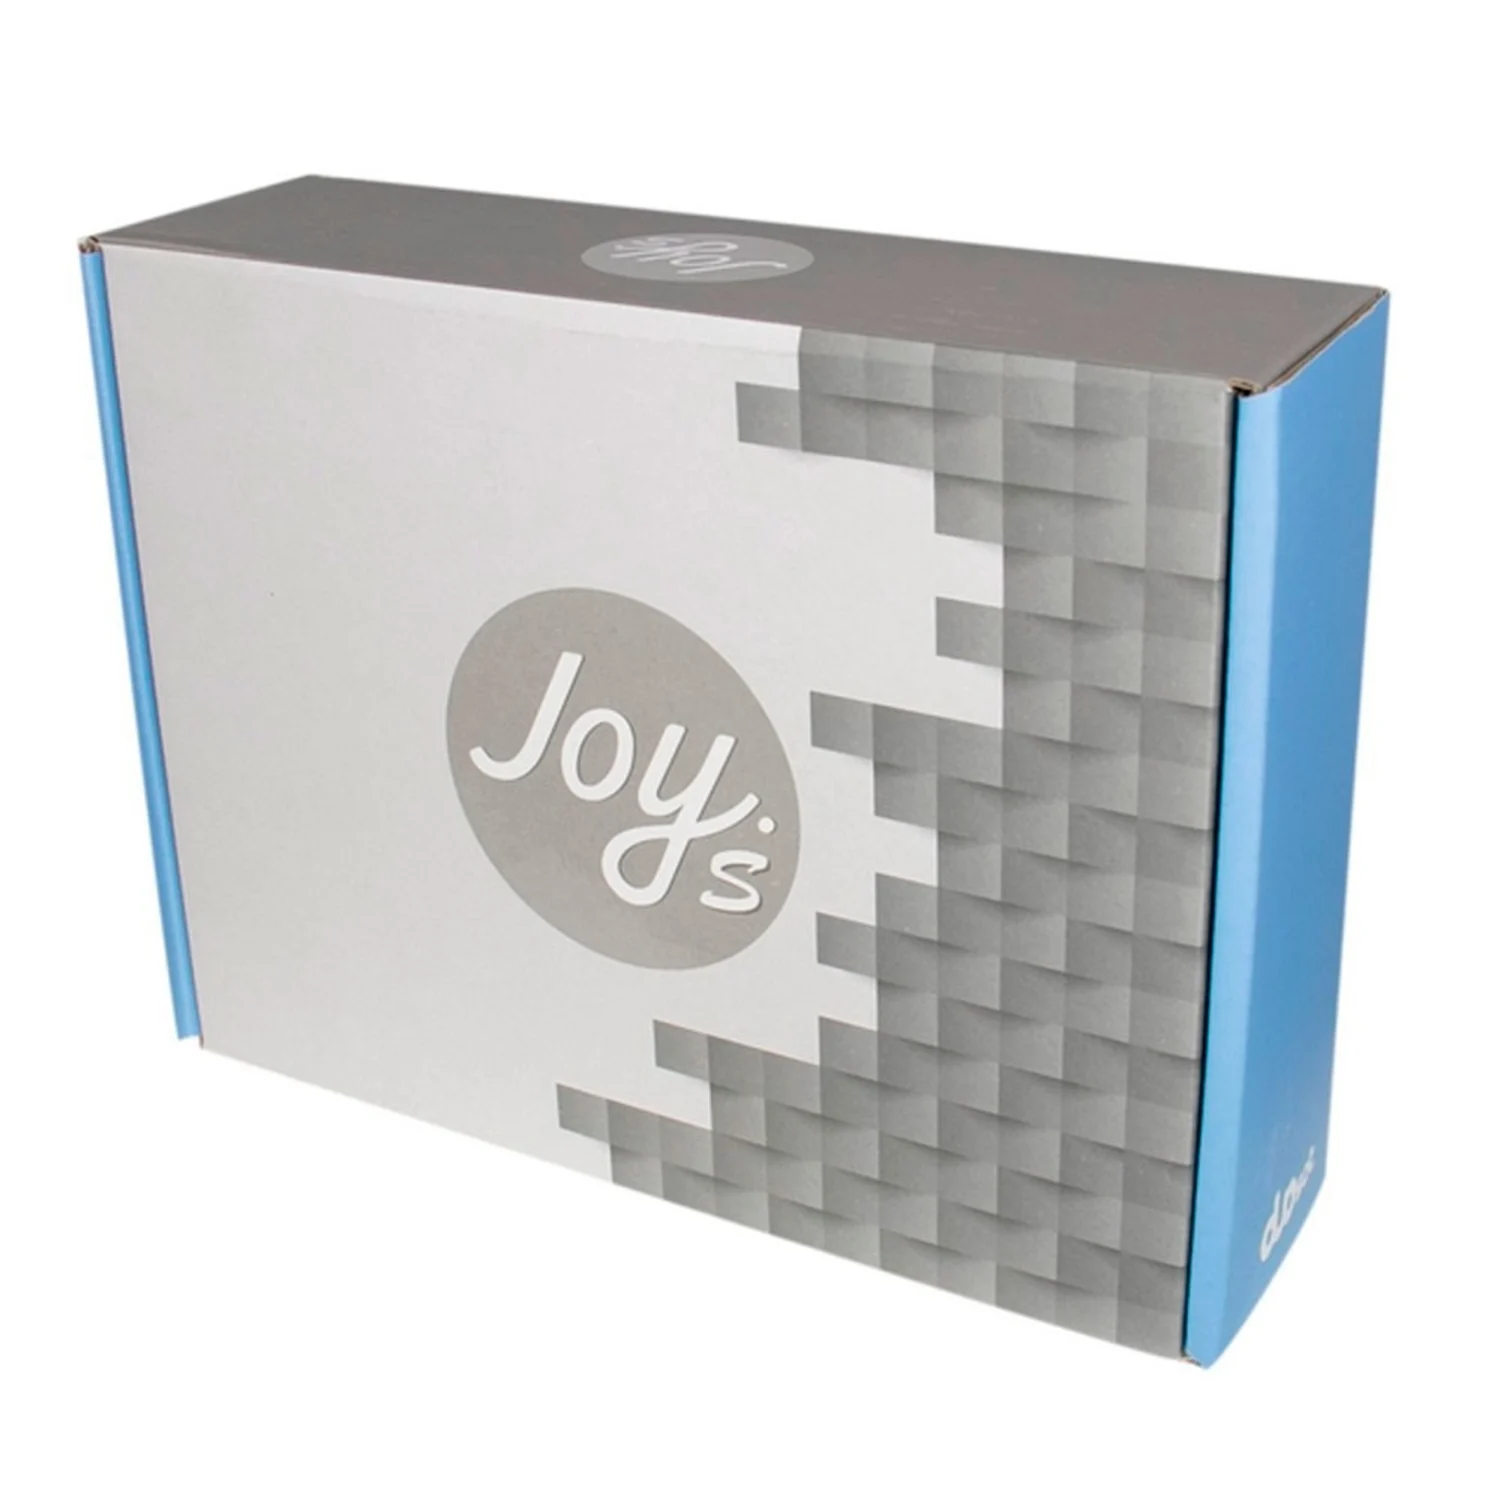 Receptor Duosat Joy S Full HD 256MB RAM Wi-Fi - Preto